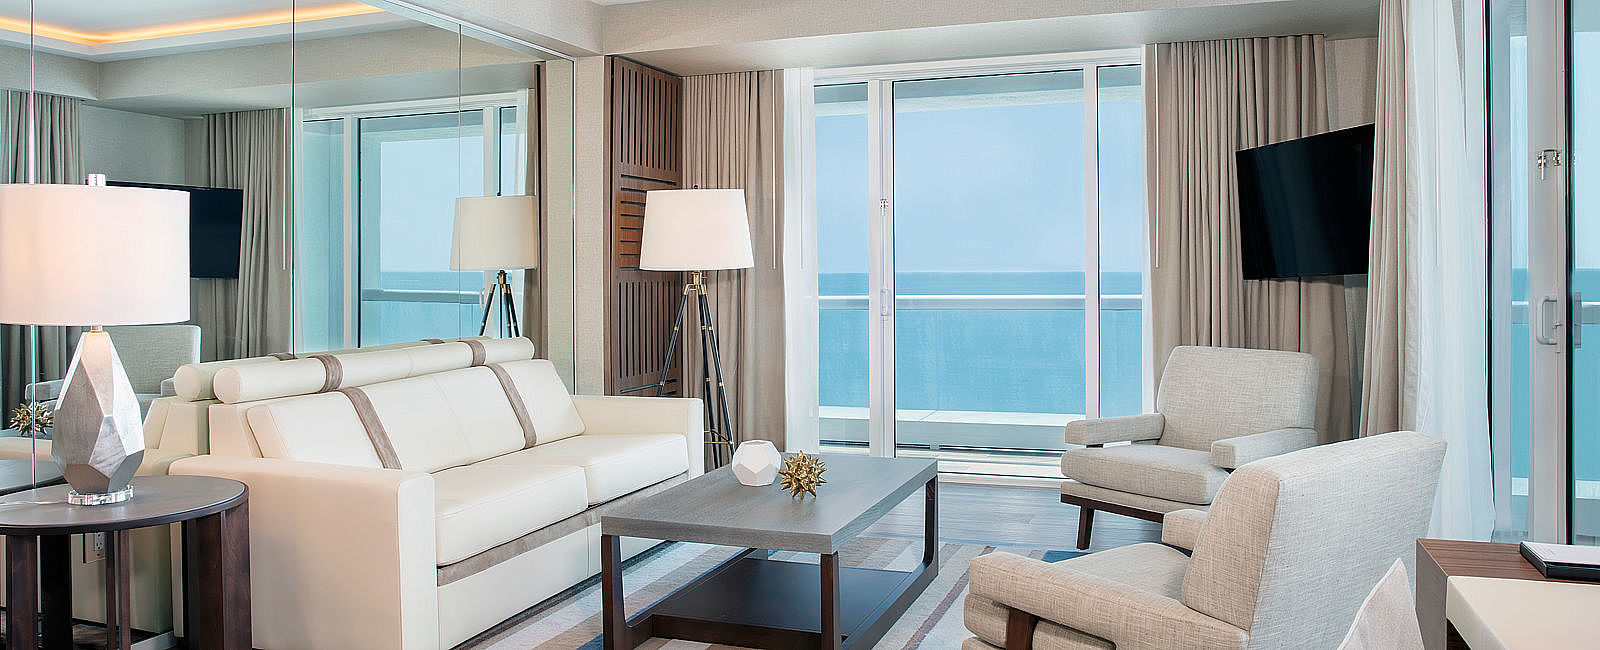 HOTEL ANGEBOTE
 Conrad Fort Lauderdale Beach: -15% 
